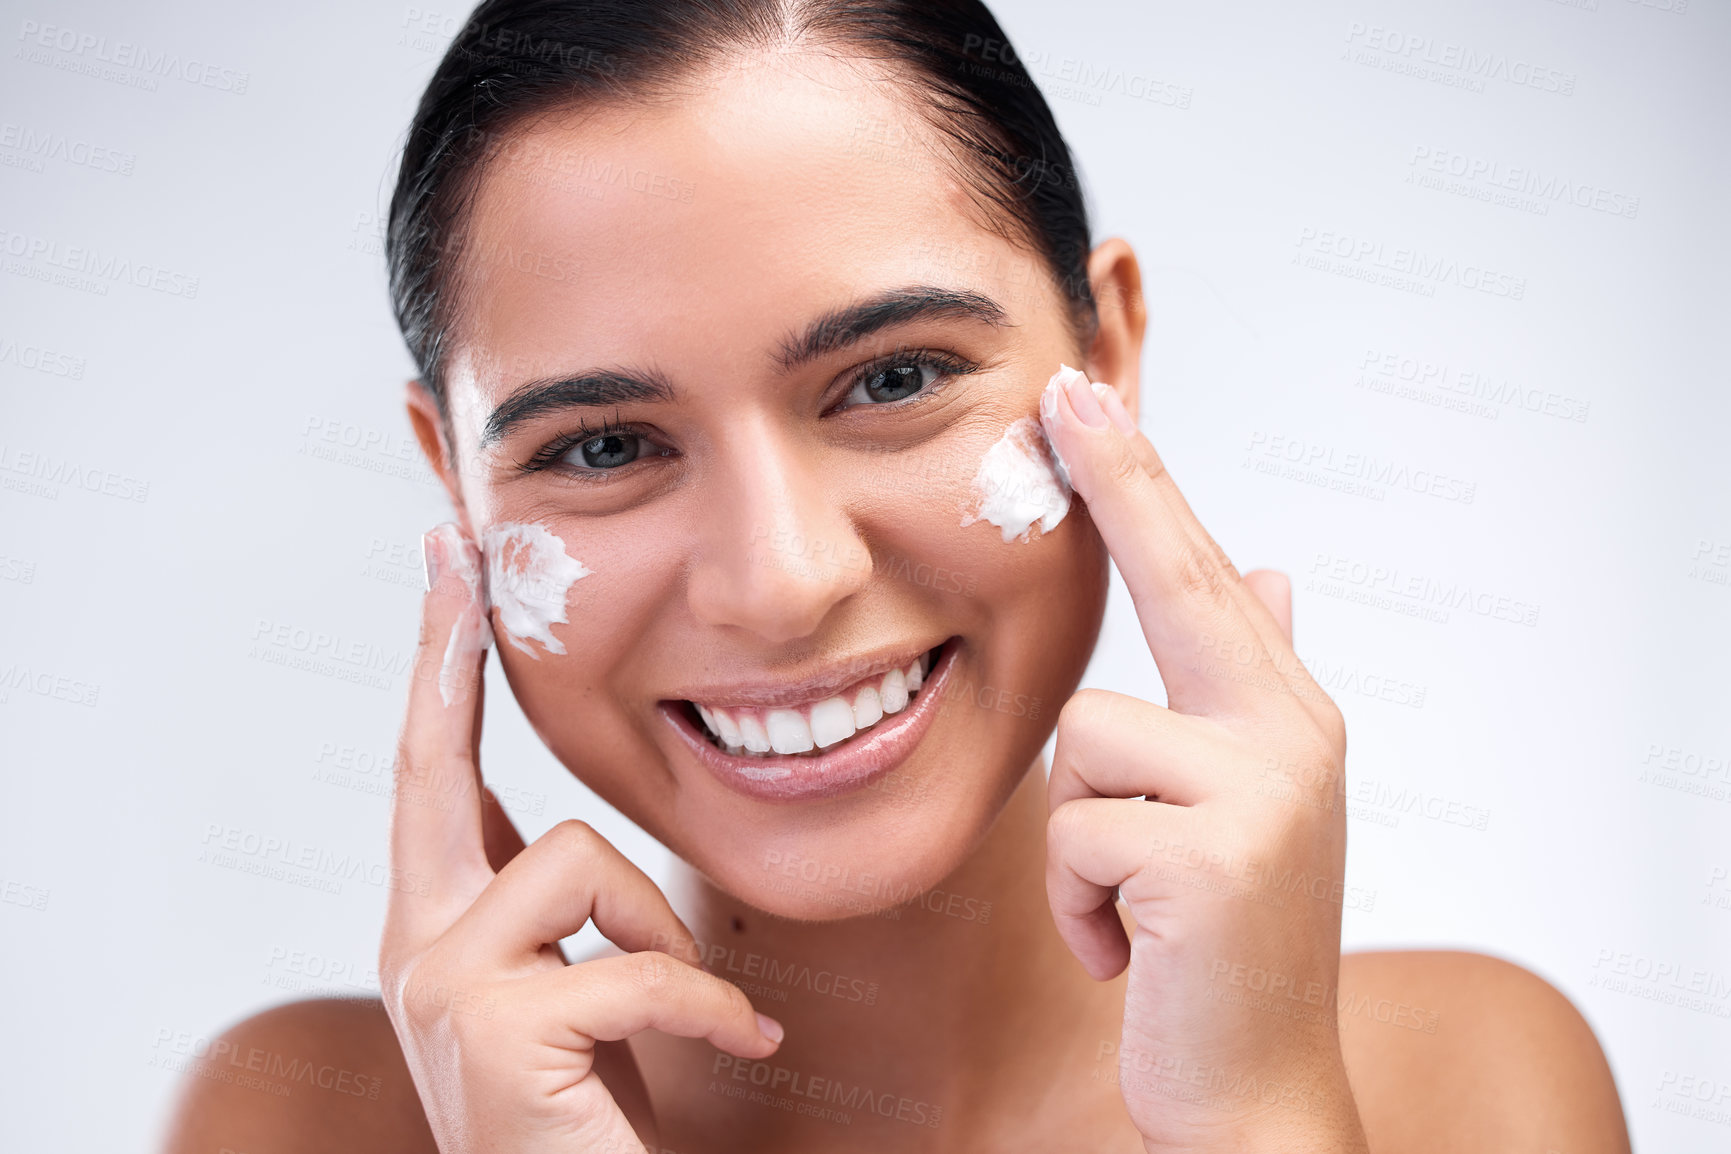 Buy stock photo Shot of a beautiful young woman applying moisturiser to her face